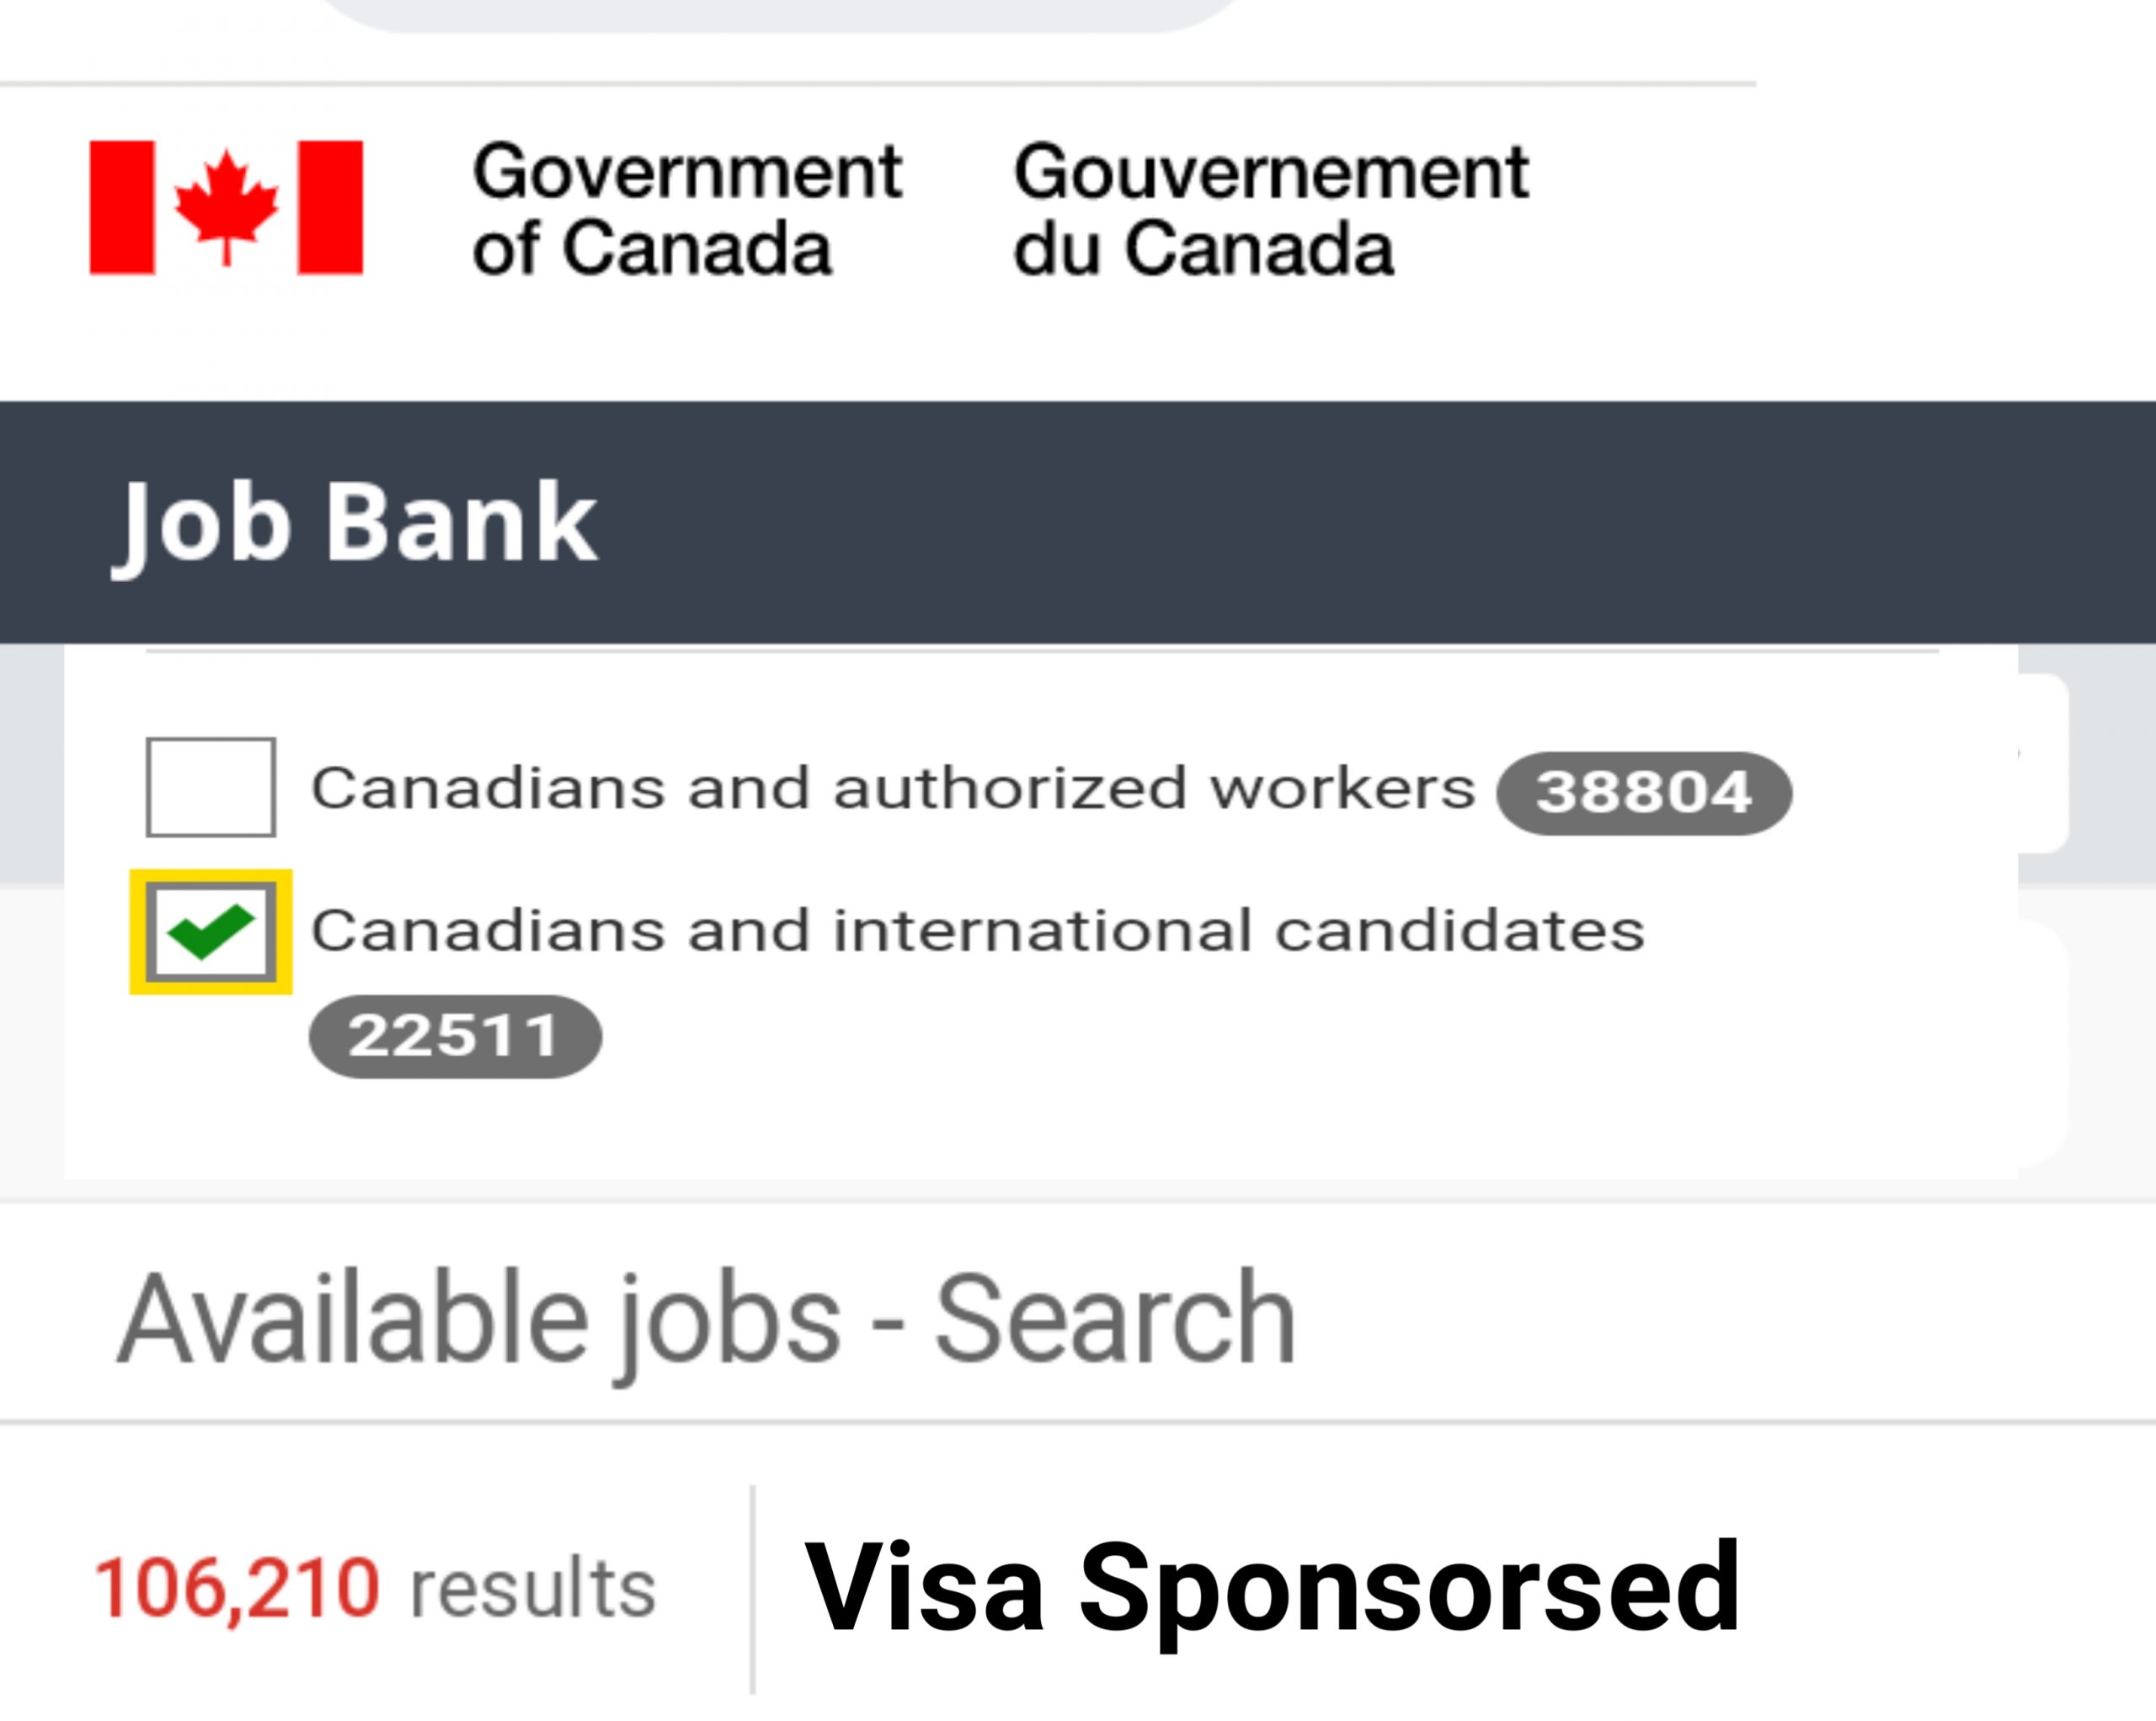 20221008 092659 scaled - Canada JobBank Visa Sponsored Jobs, How to Apply Successful  